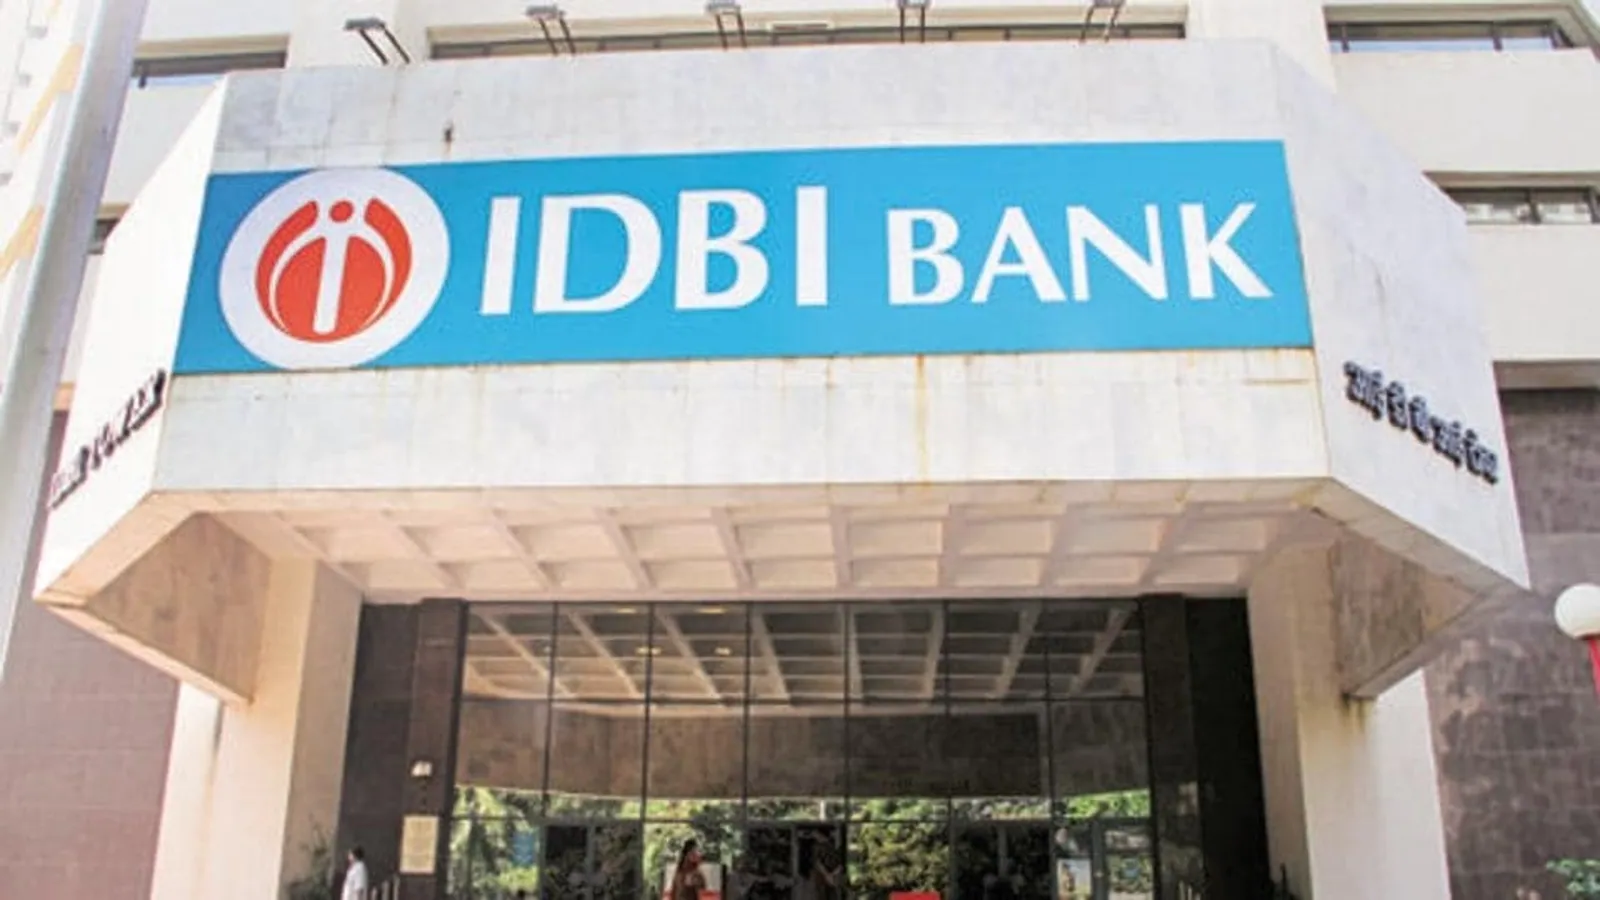 IDBI Bank Q1 net profit rises 25 pc to ₹756 cr on better asset quality